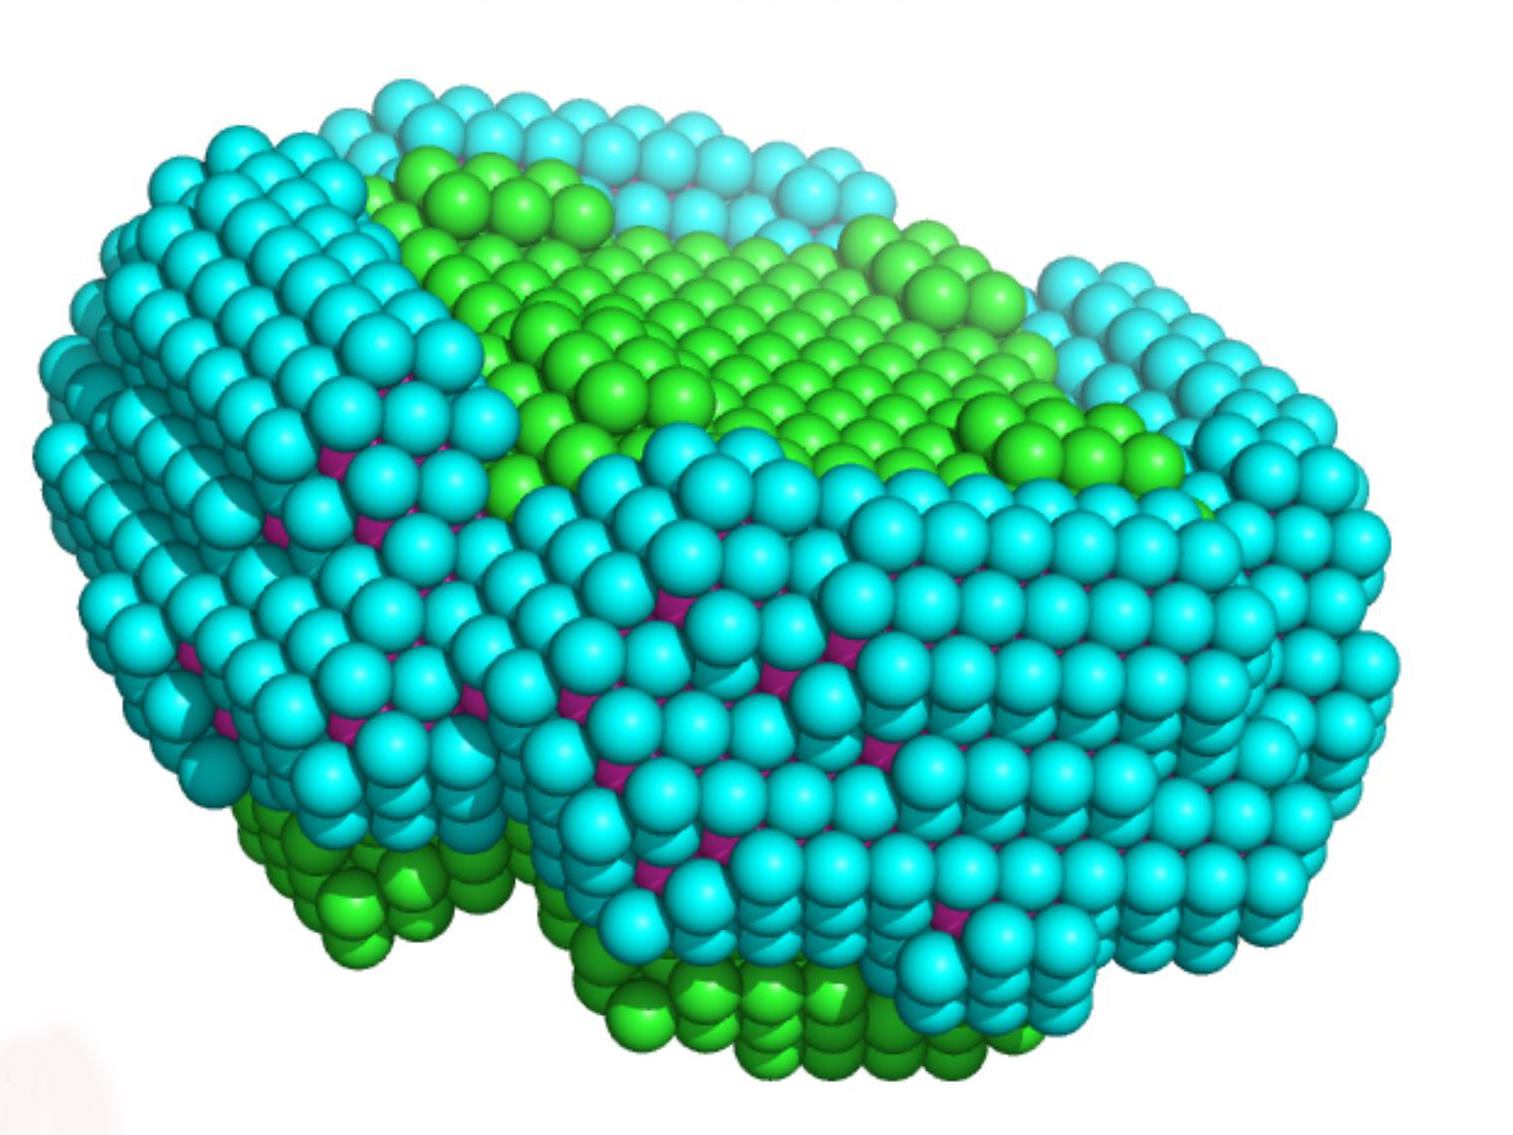 A new “neutron window” onto membrane protein structures